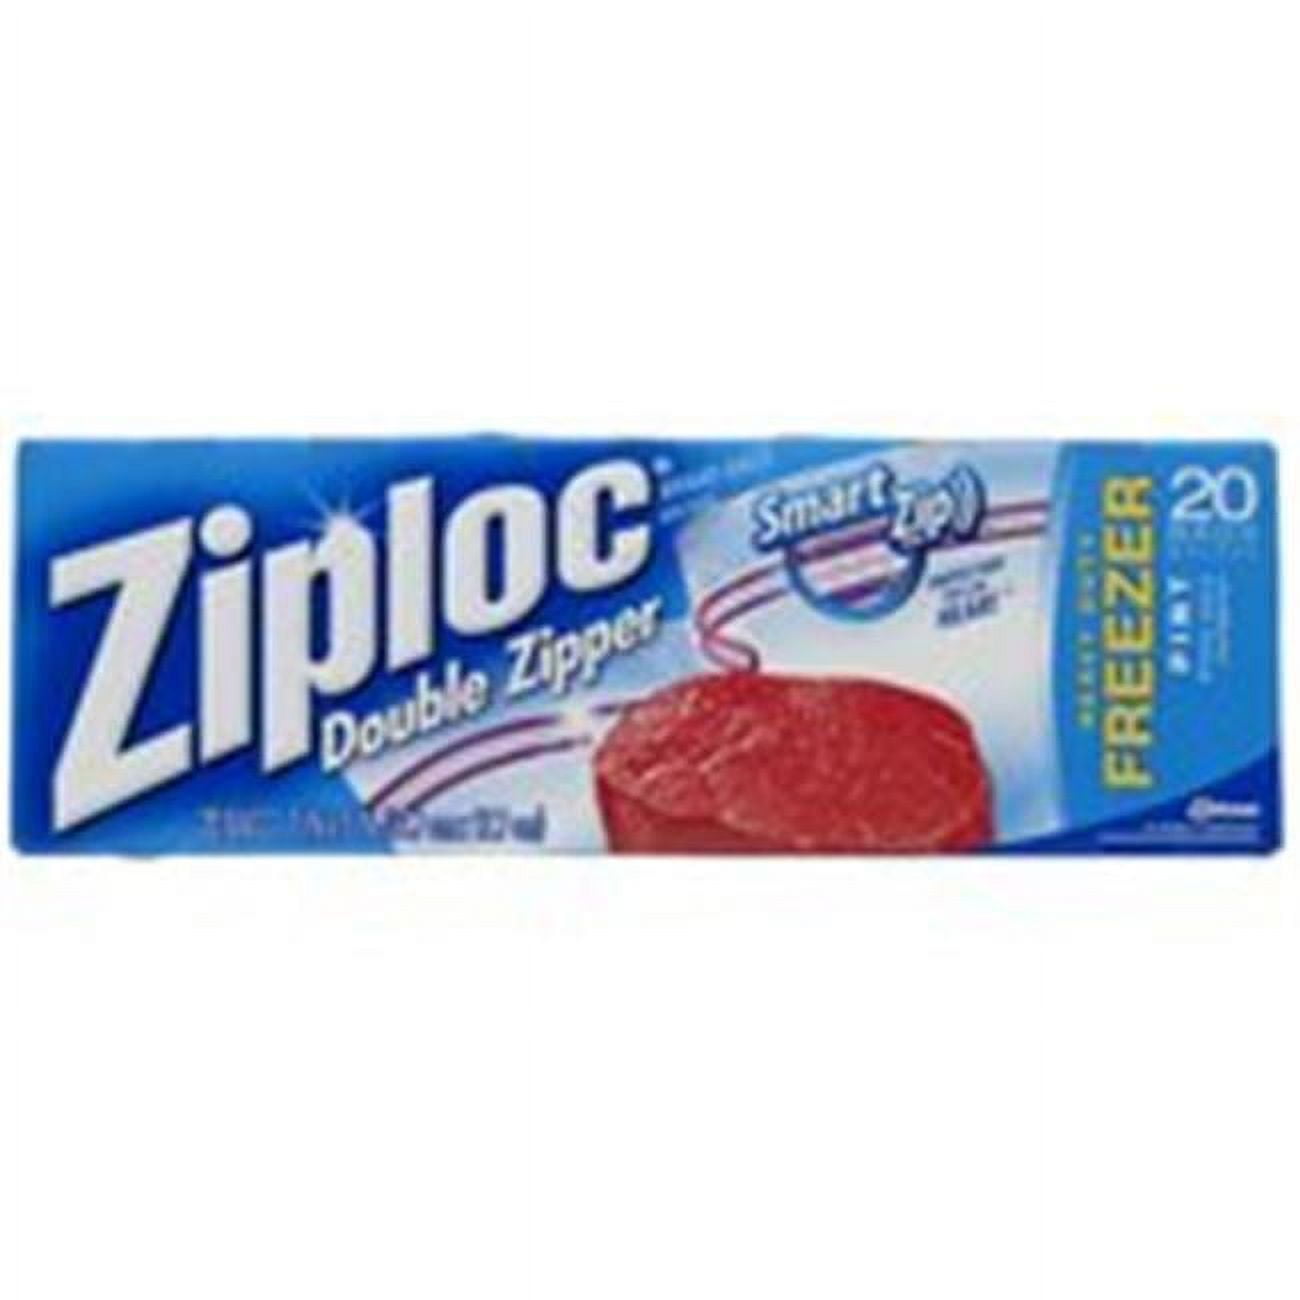 Ziploc 1 Pt. Double Zipper Freezer Bag (20-Count) - Power Townsend Company